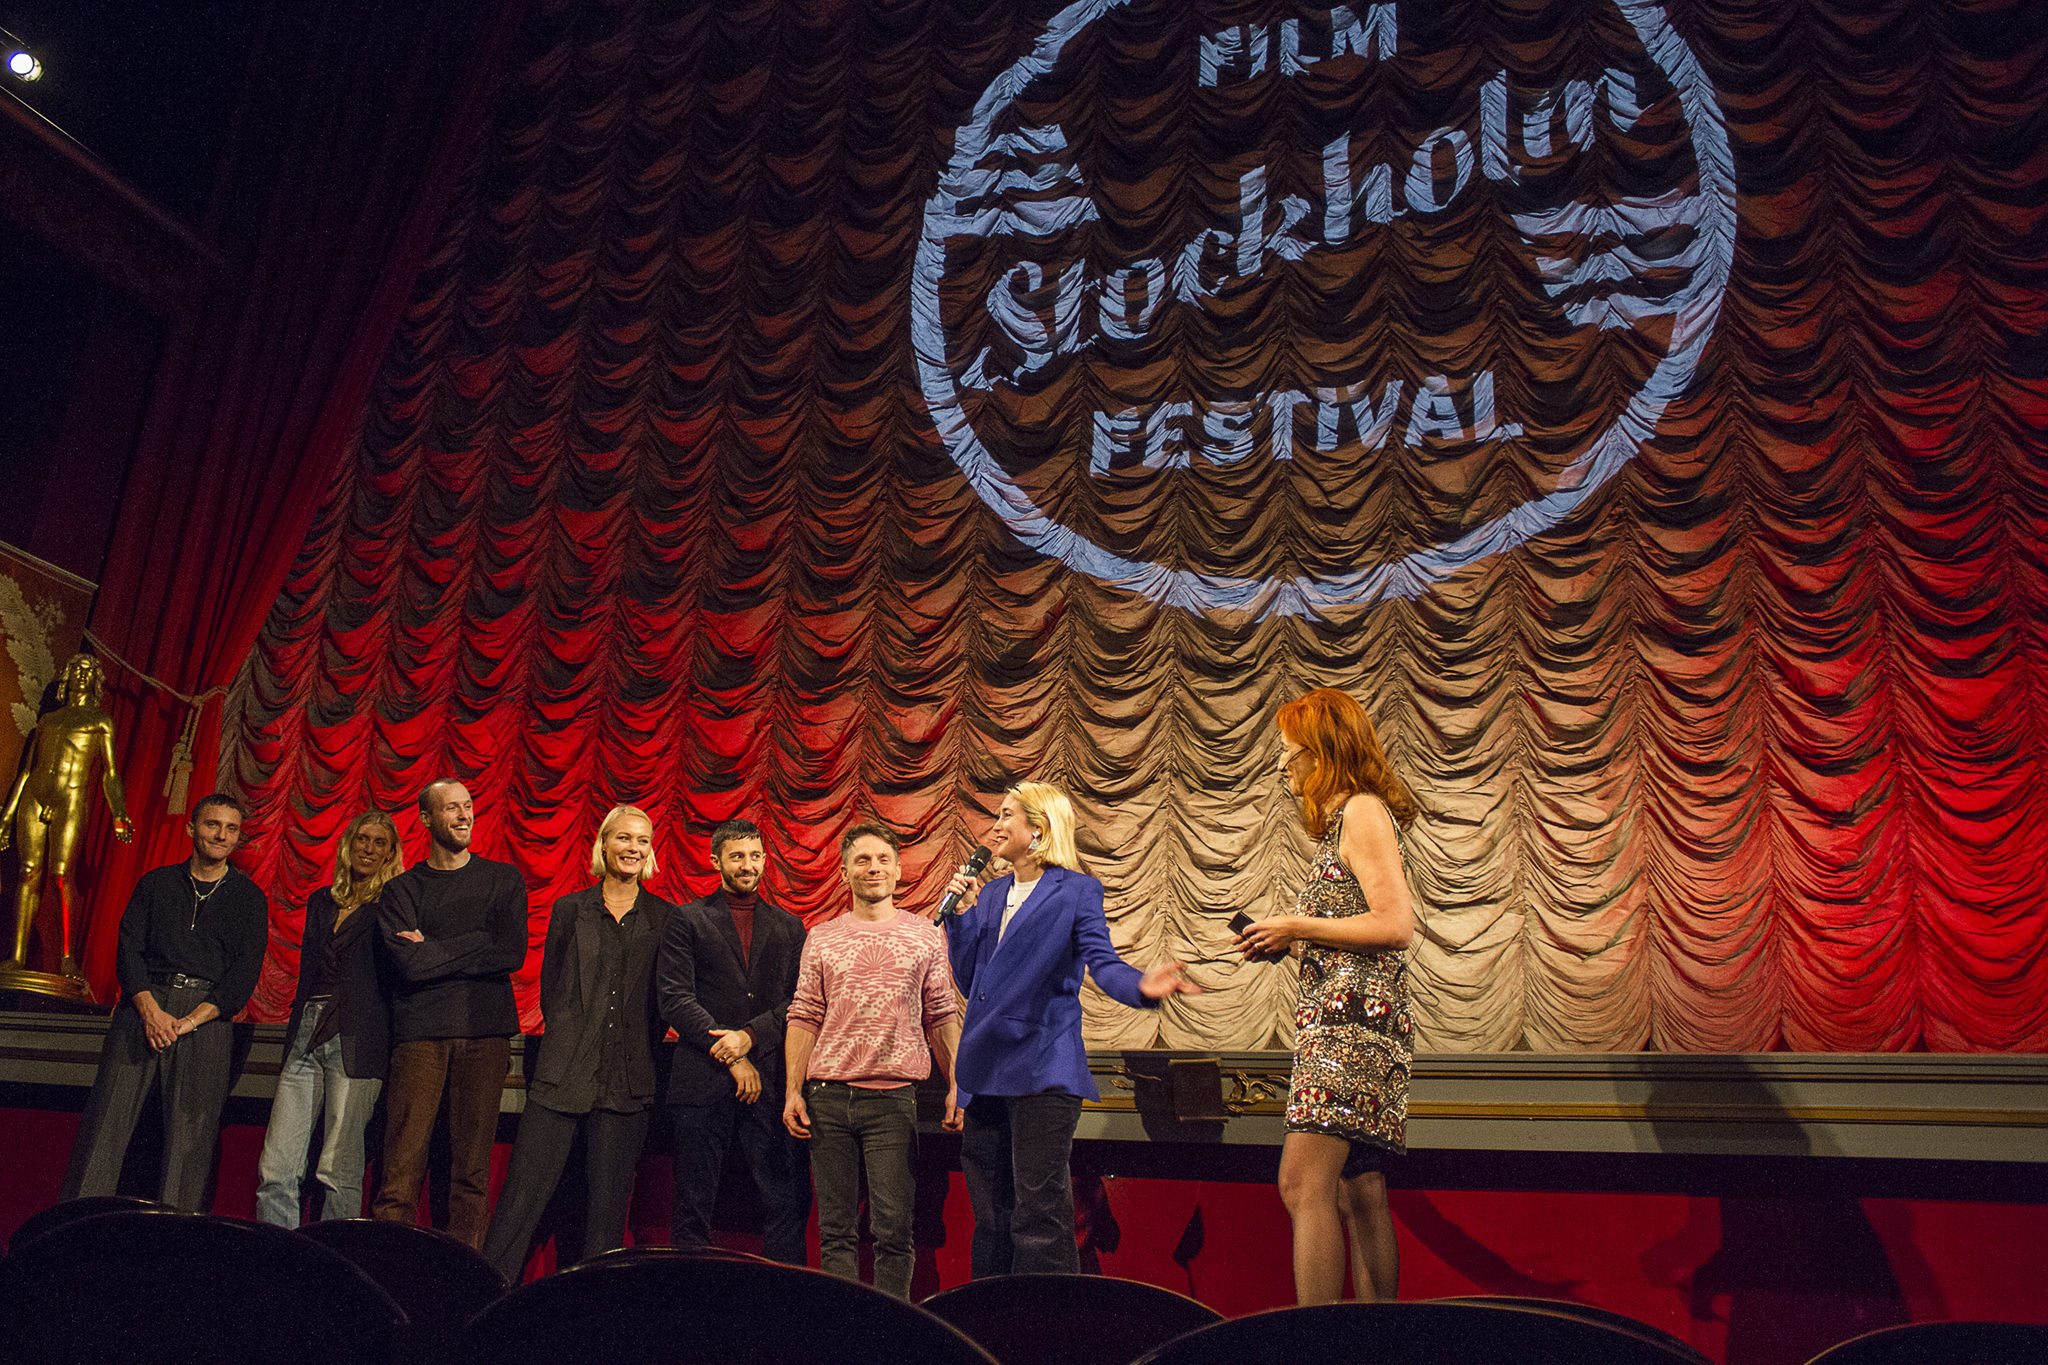 Julia Thelin lilla Olle premiere Stockholm Film Festival opening gala